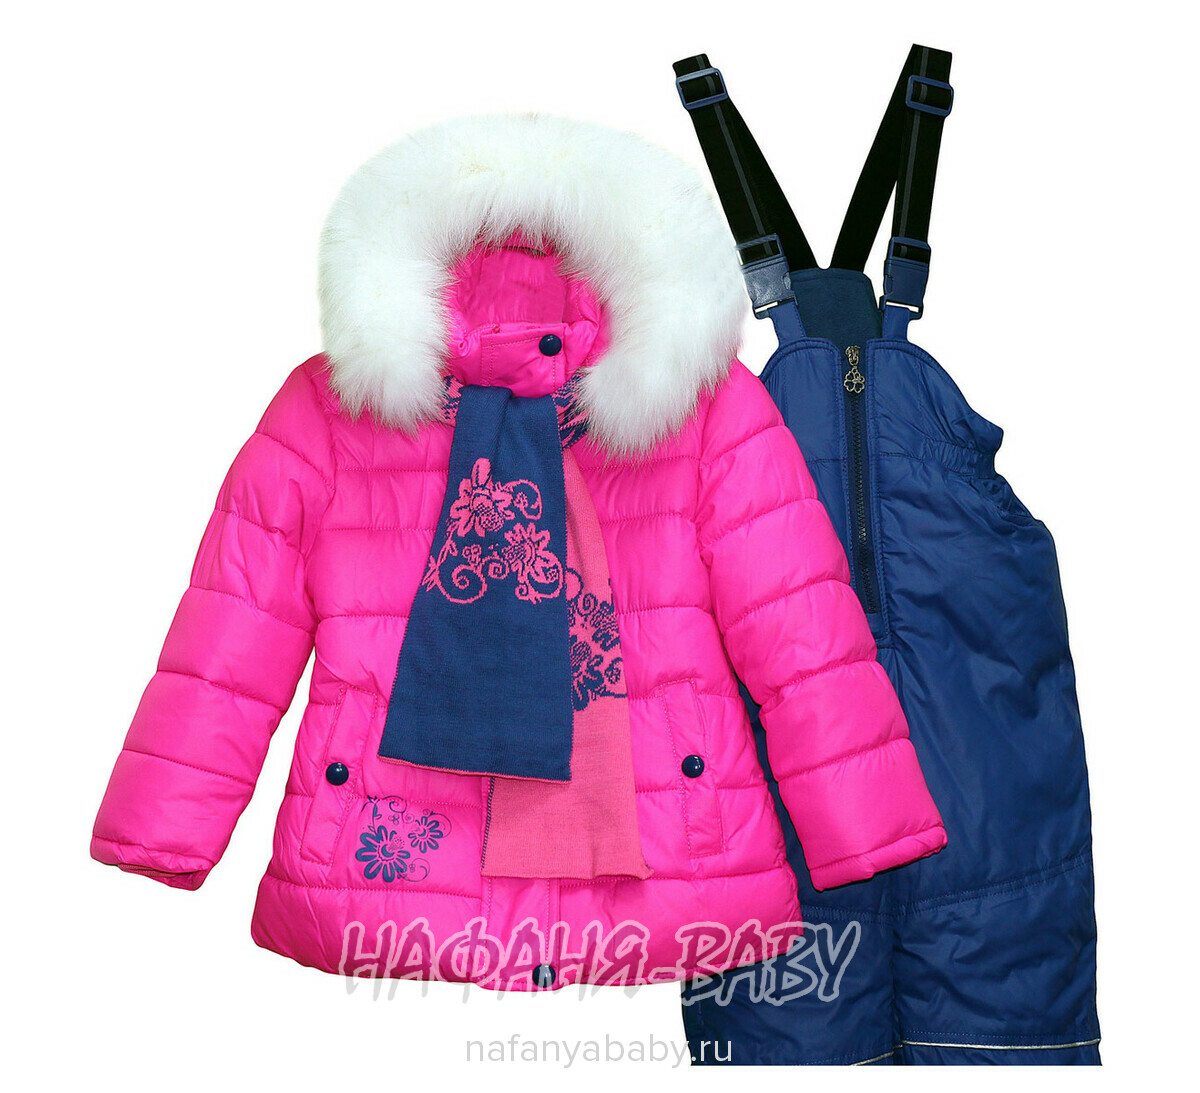 Зимний костюм (куртка+полукомбинезон+шарфик) DANPING арт: 6608, 1-4 года, оптом Китай (Пекин)